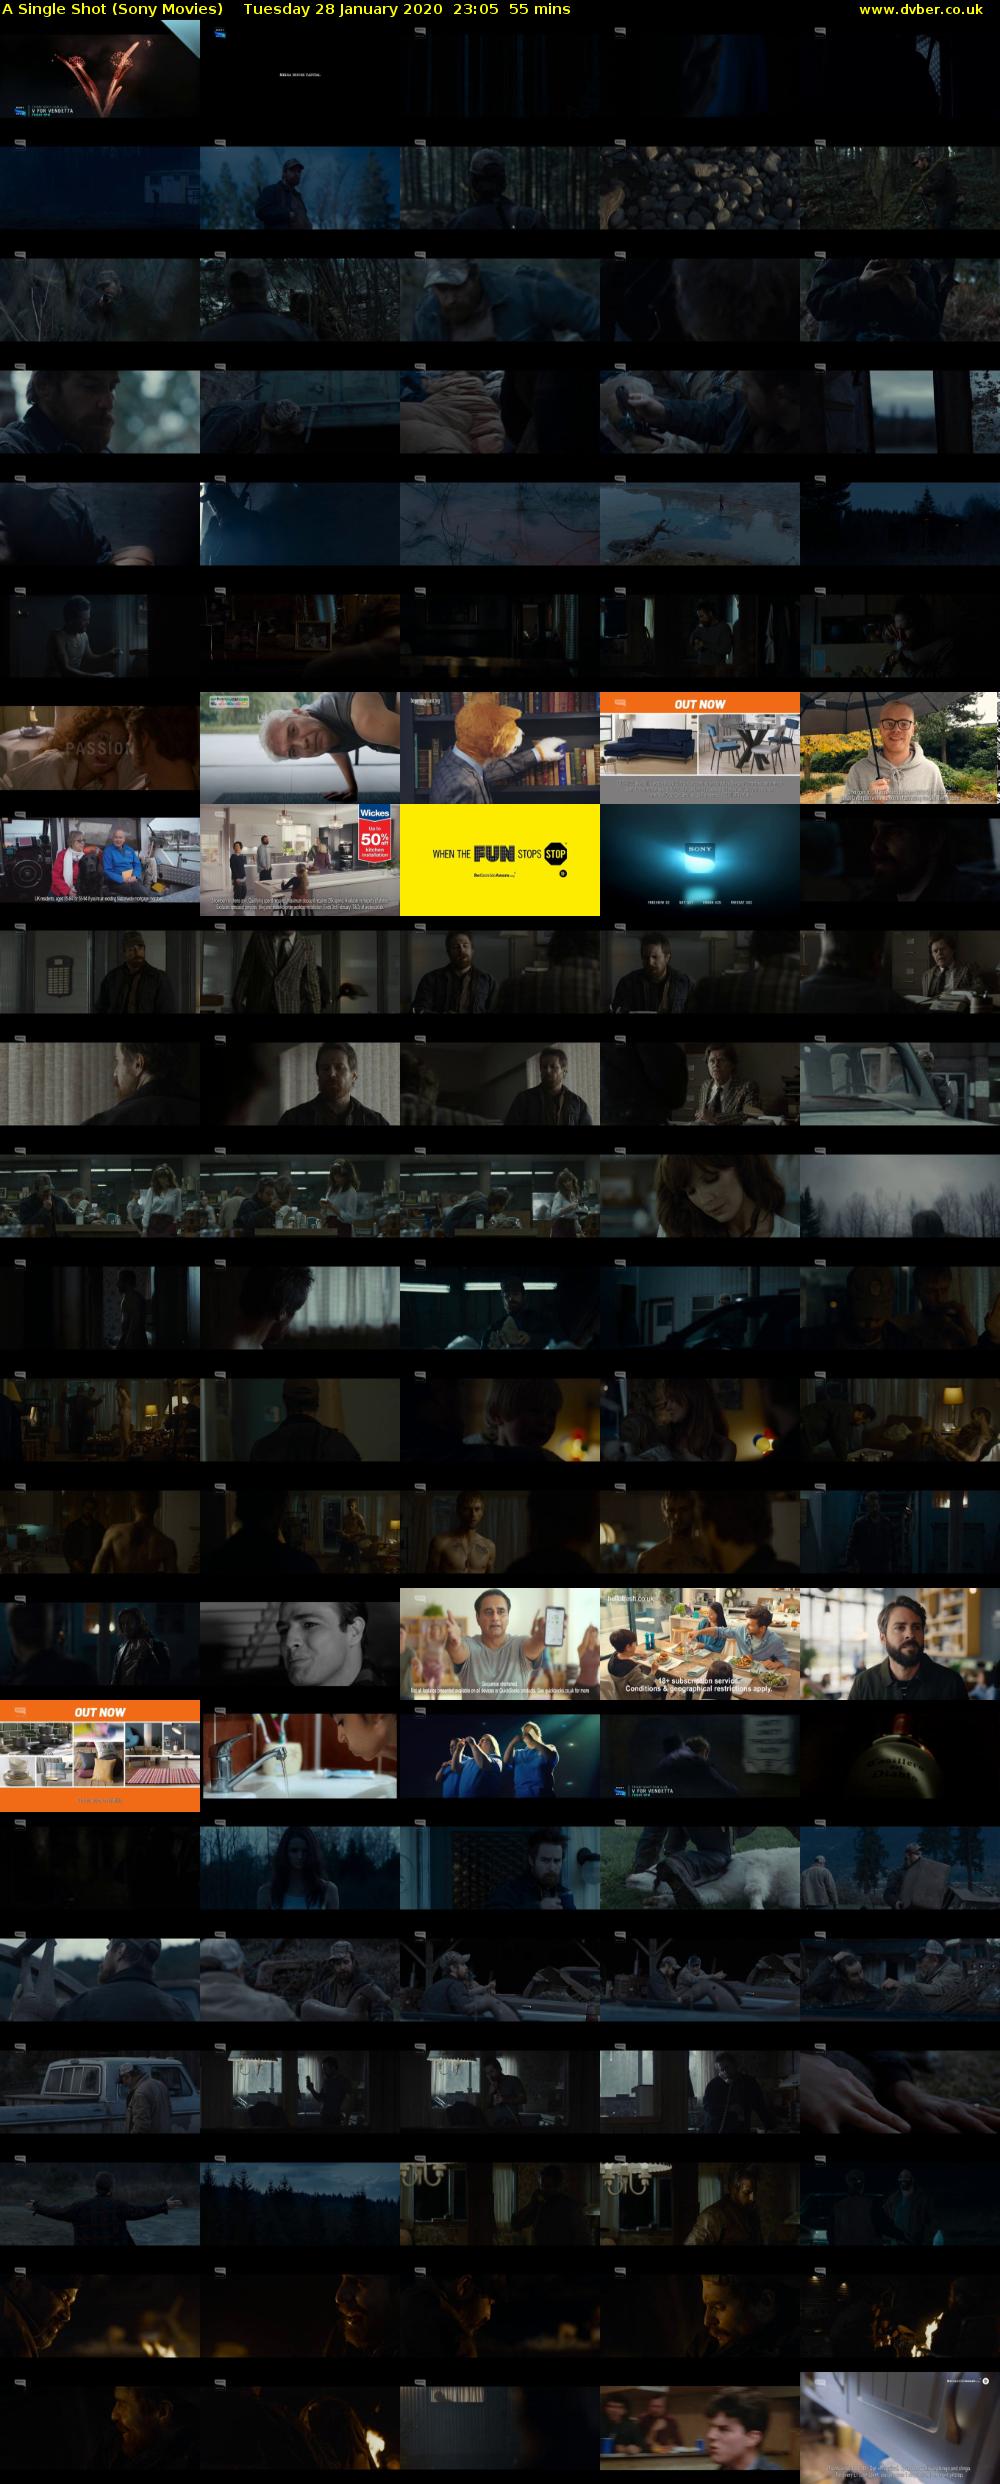 A Single Shot (Sony Movies) Tuesday 28 January 2020 23:05 - 00:00